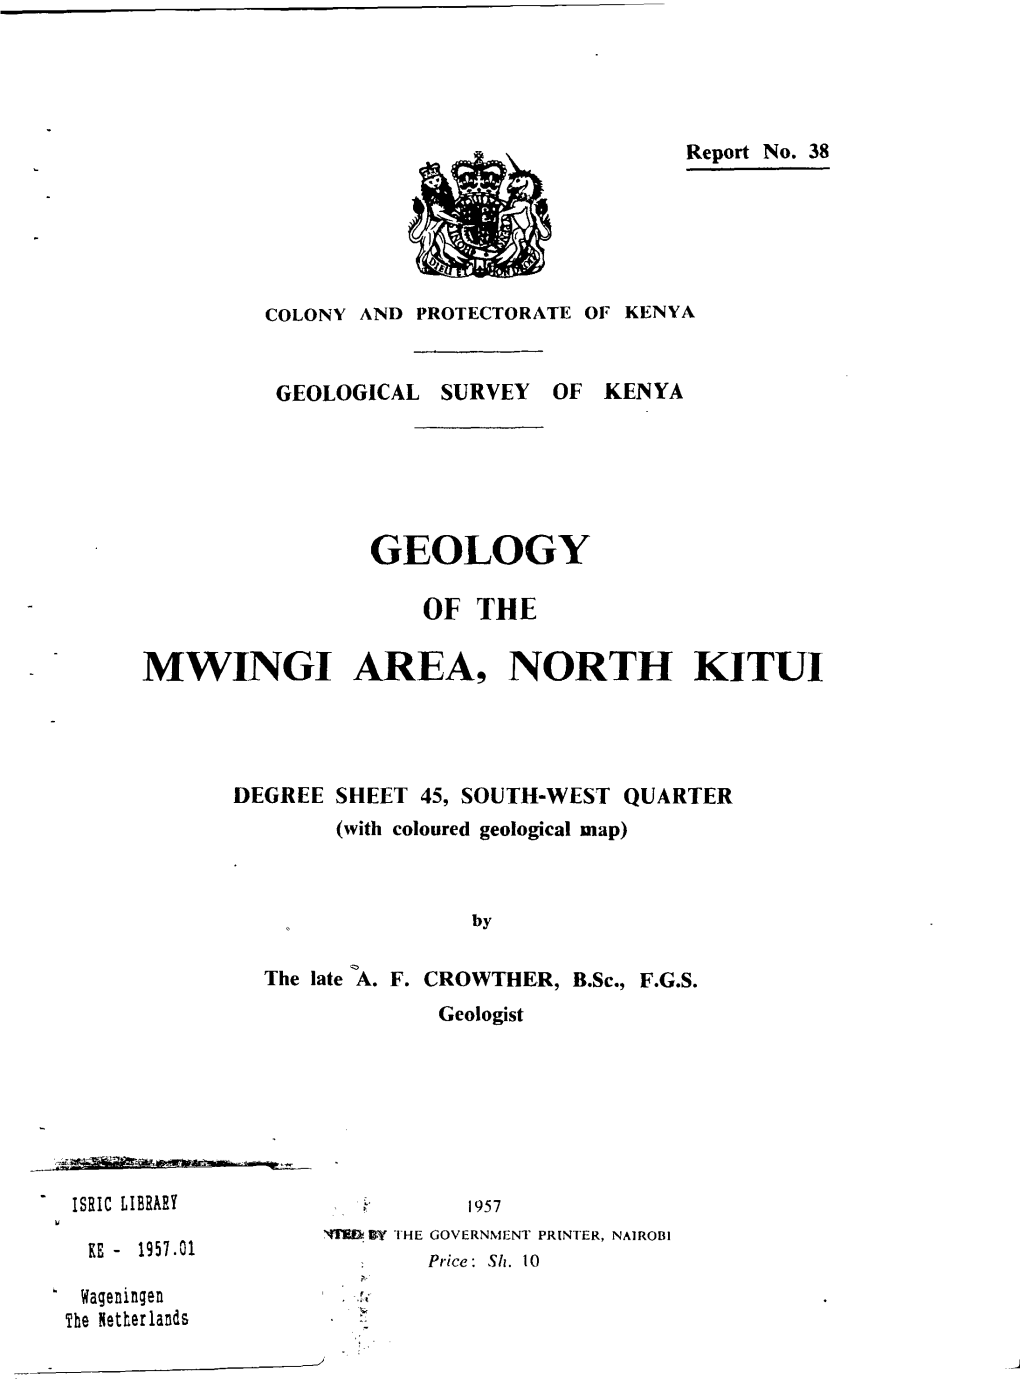 Geology of the Mwingi Area, North Kitui. Degree Sheet 45, South-West Quarter